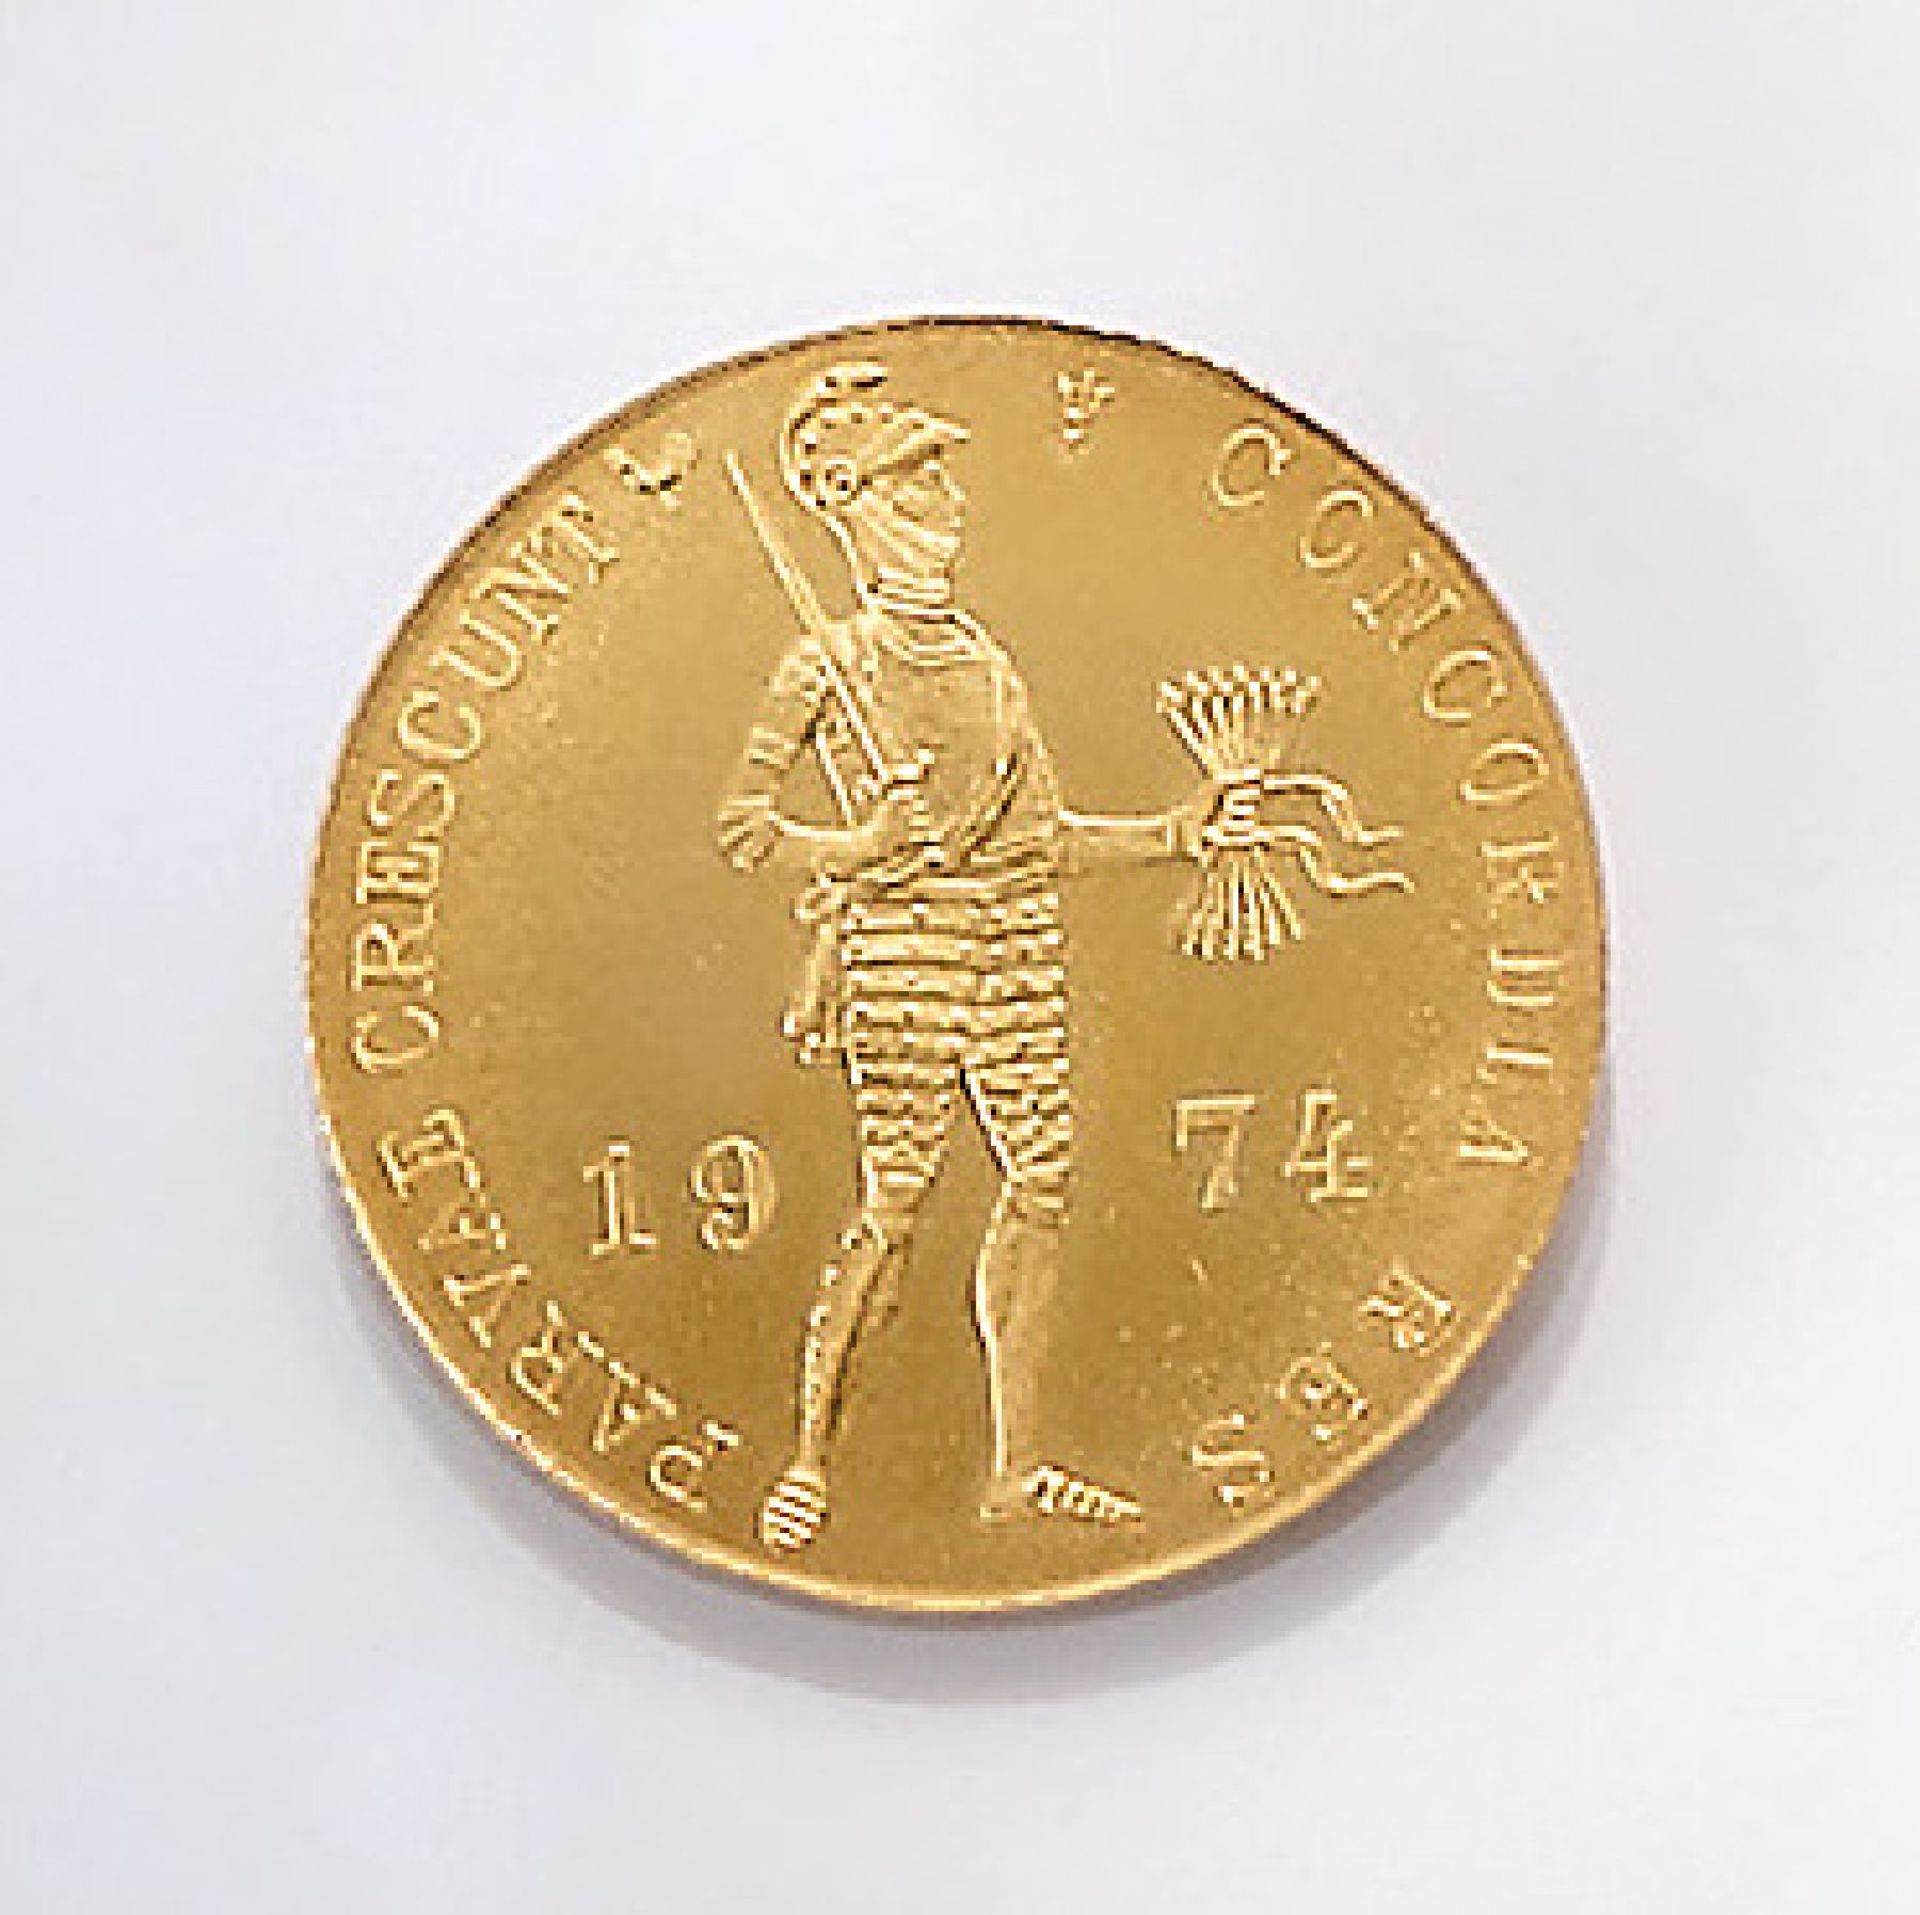 Goldmünze Belgien 1 Dukat, 1974Gold coin Belgium 1 ducat, 1974